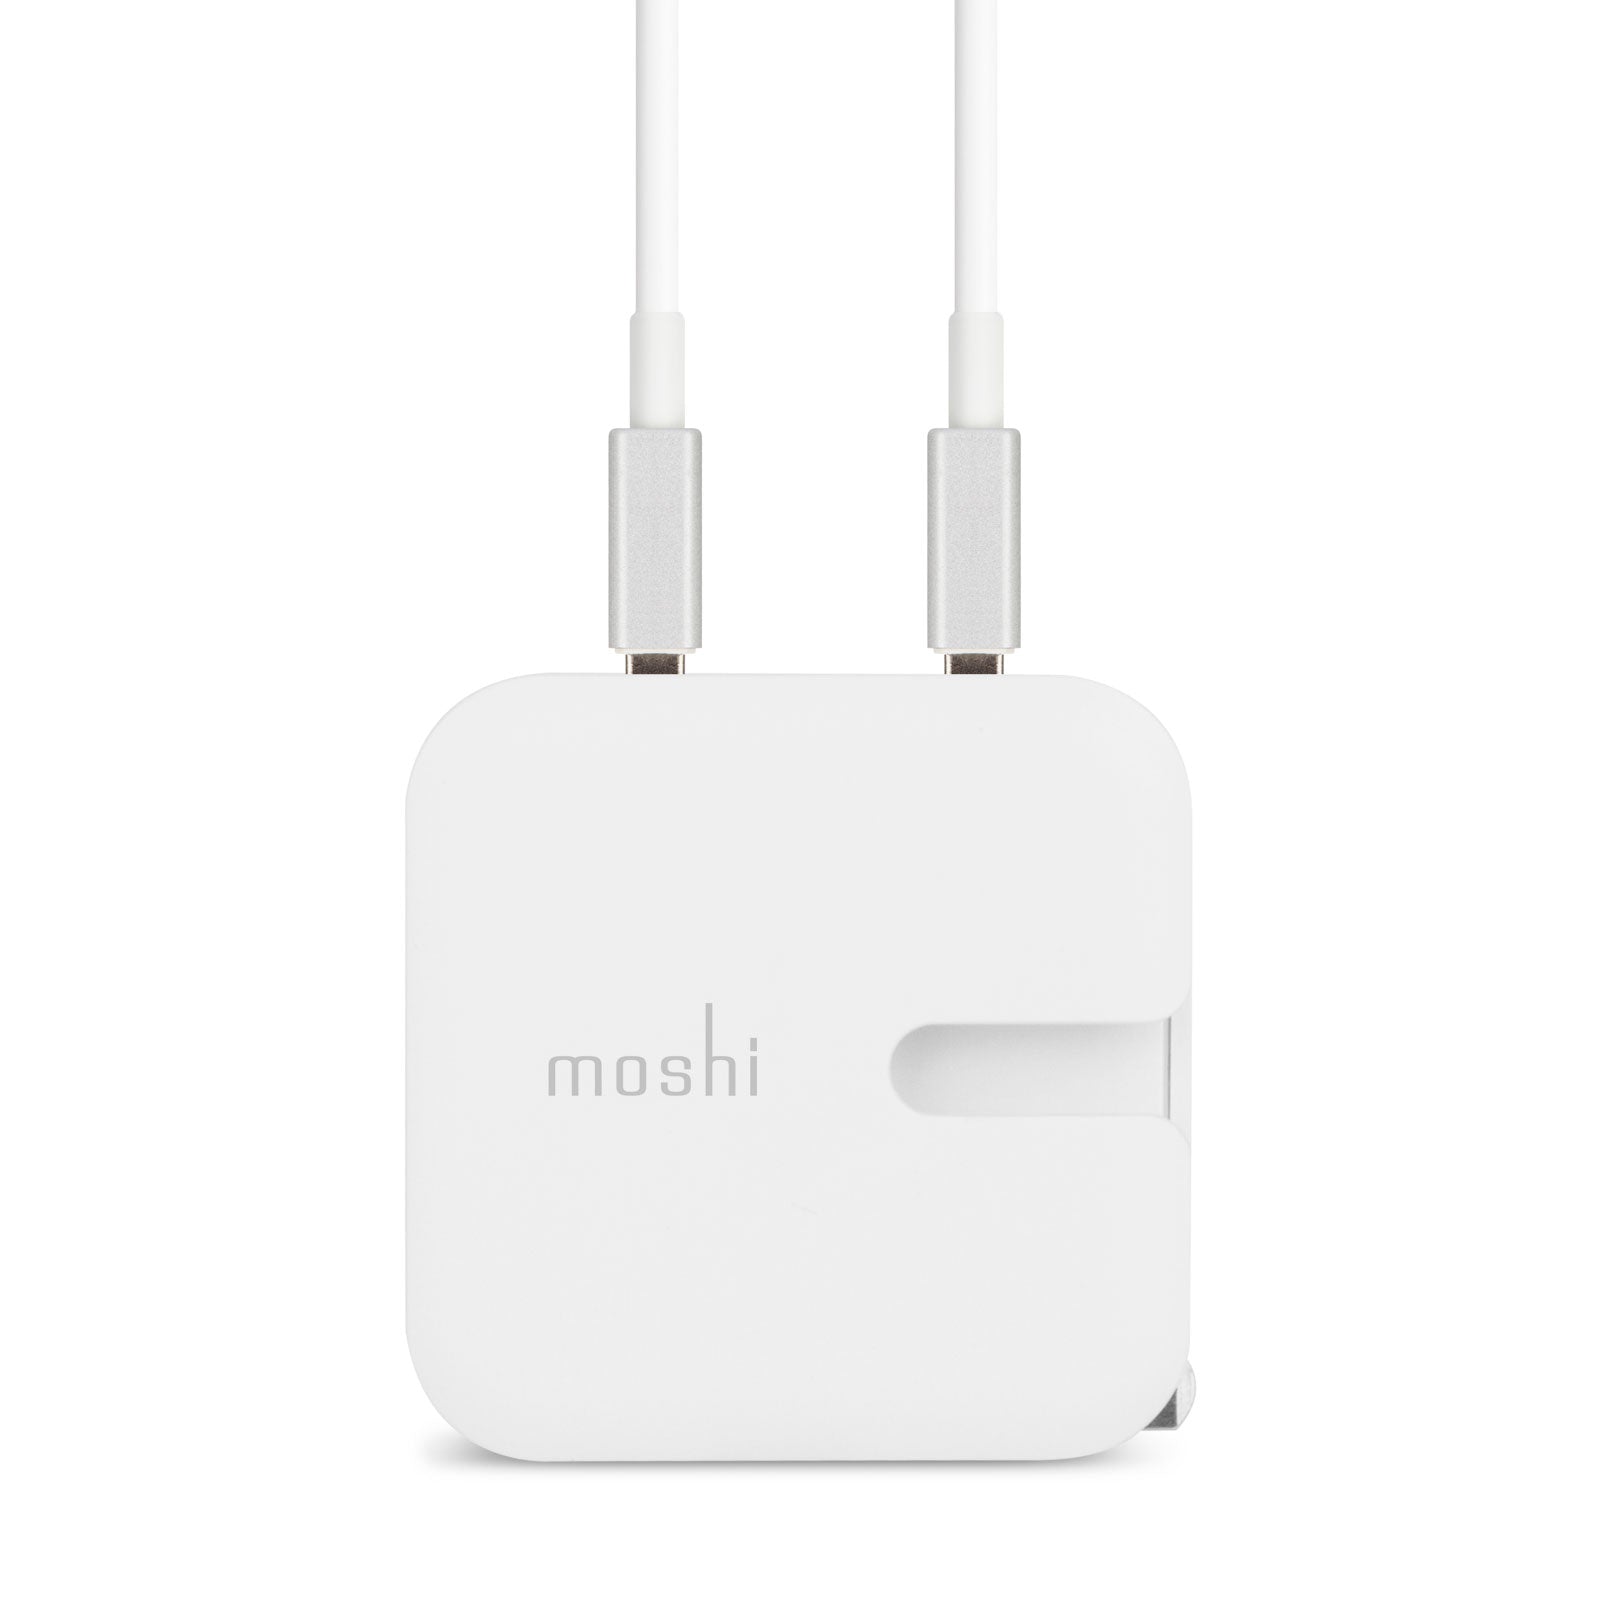 Moshi Rewind Dual-Port USB Wall Charger